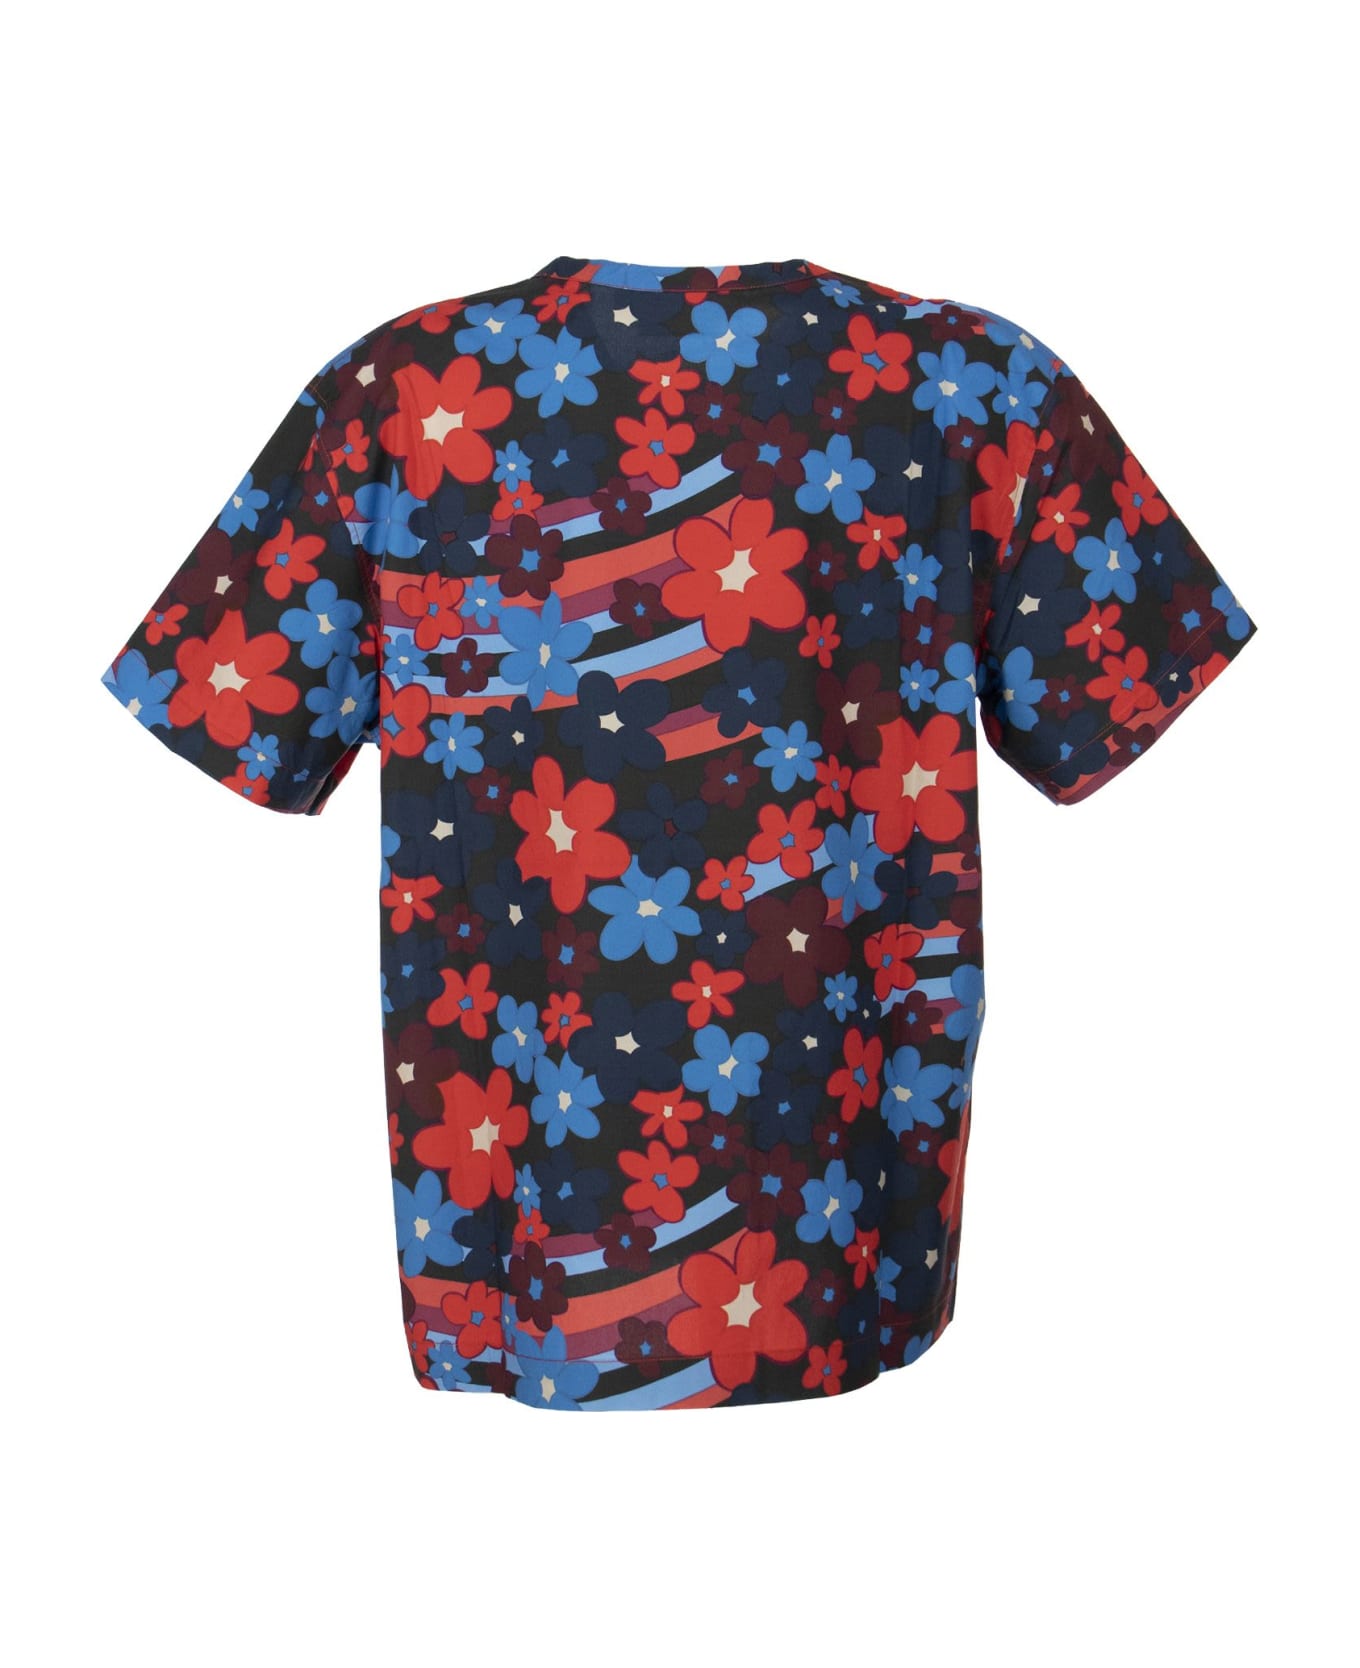 Marni Rainbow Flower Printed Cotton Shirt - Multicolor